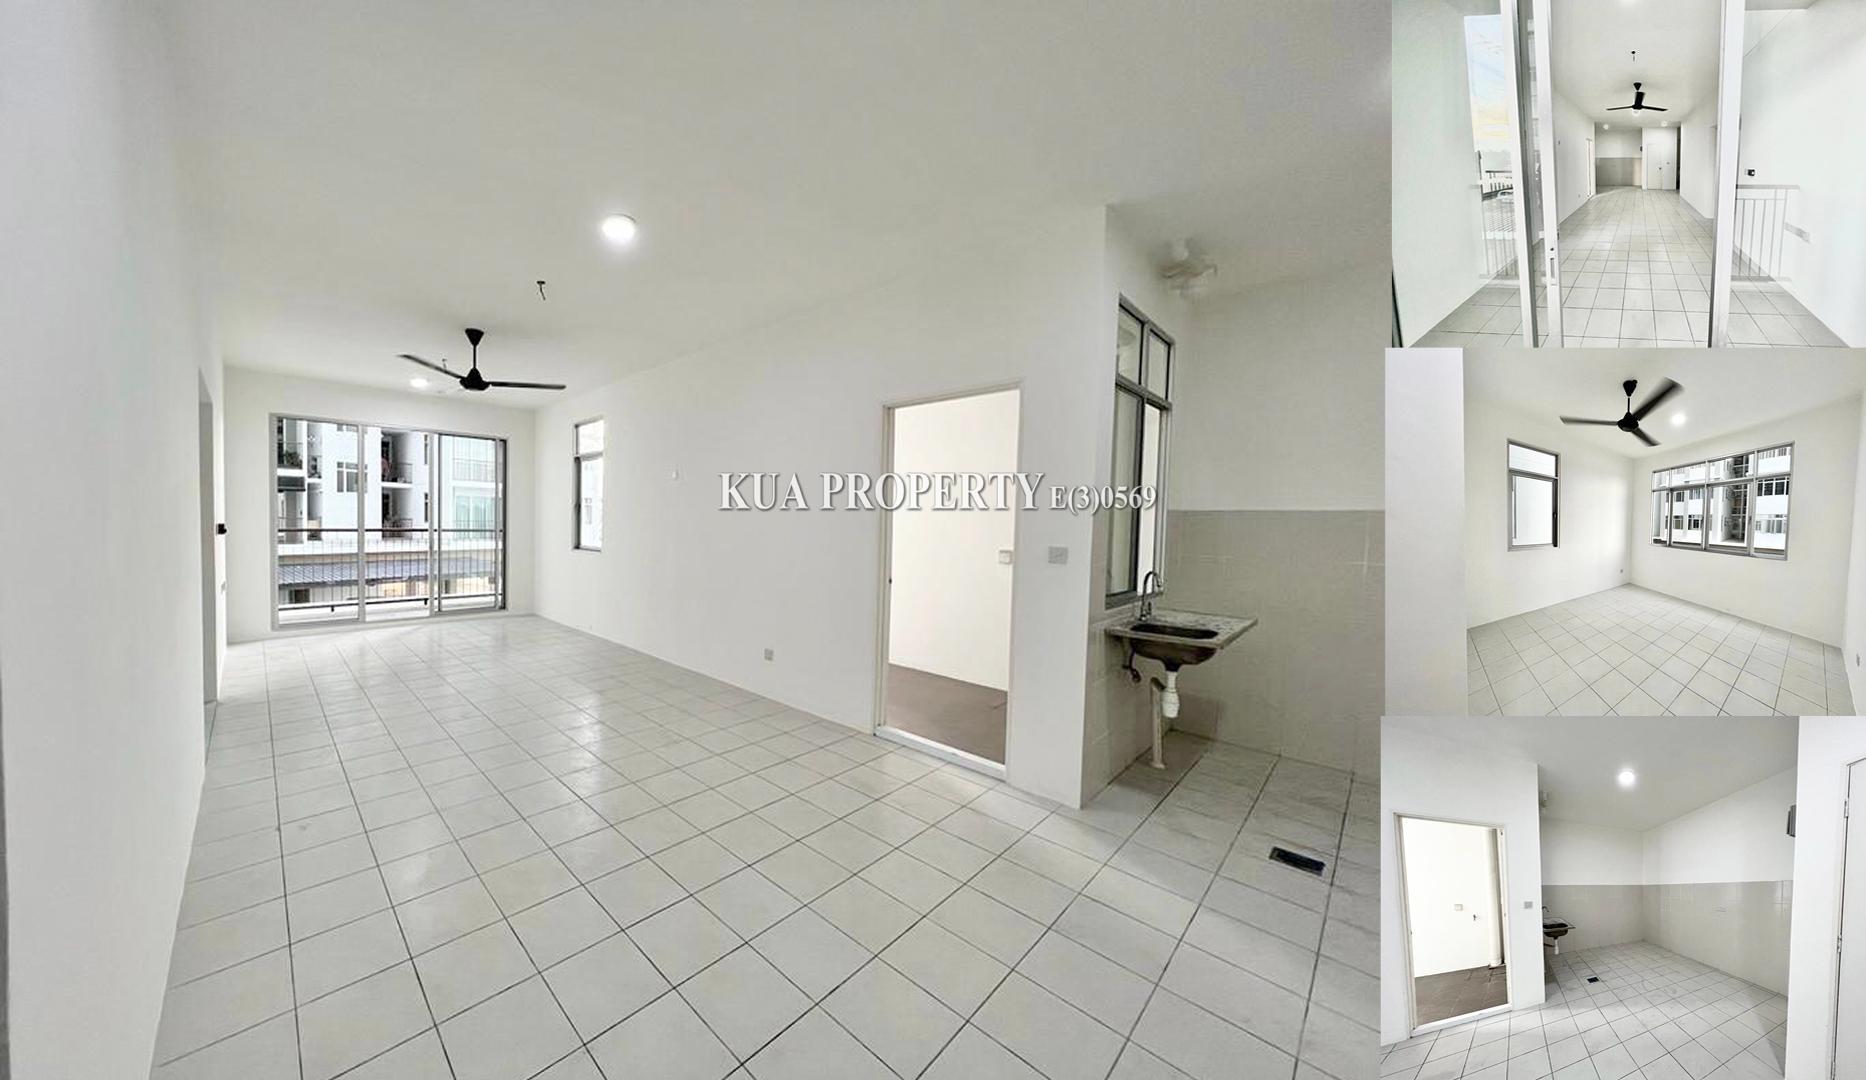 1st Floor Prima Bintawa Apartment For Rent Located at Bintawa, Kuching